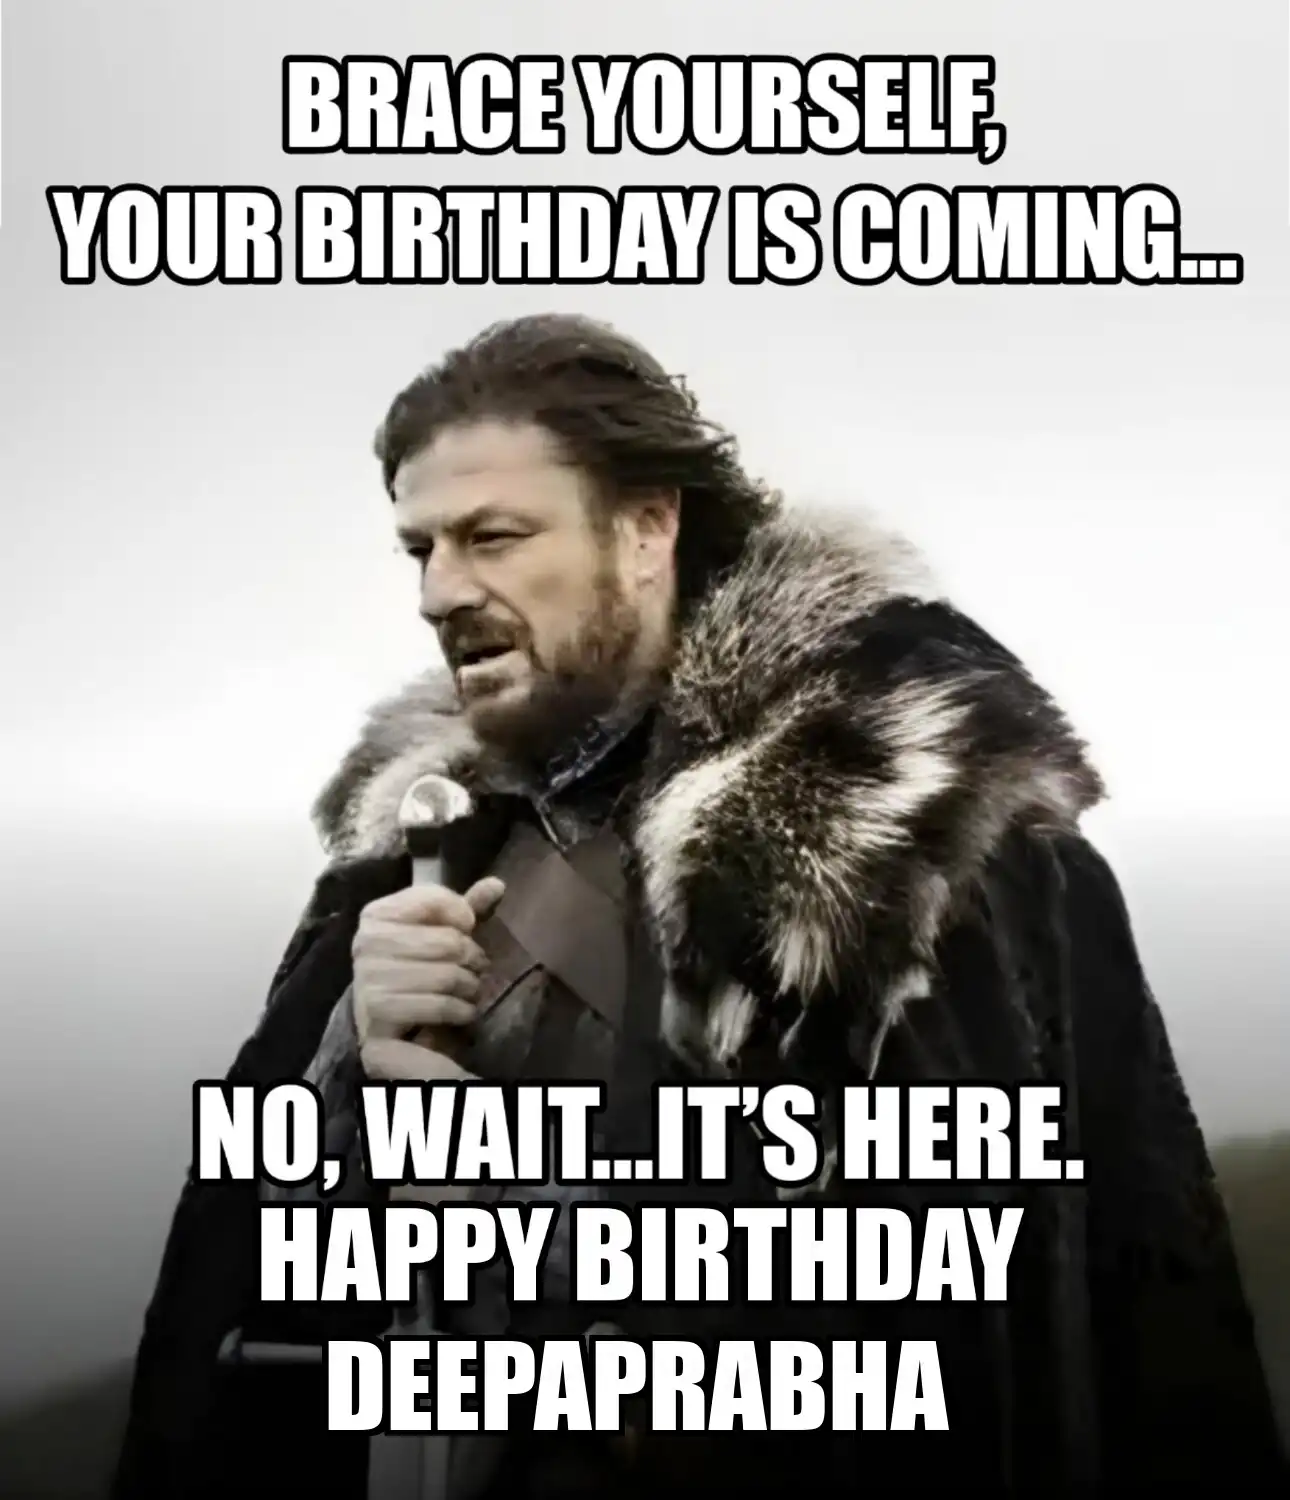 Happy Birthday Deepaprabha Brace Yourself Your Birthday Is Coming Meme